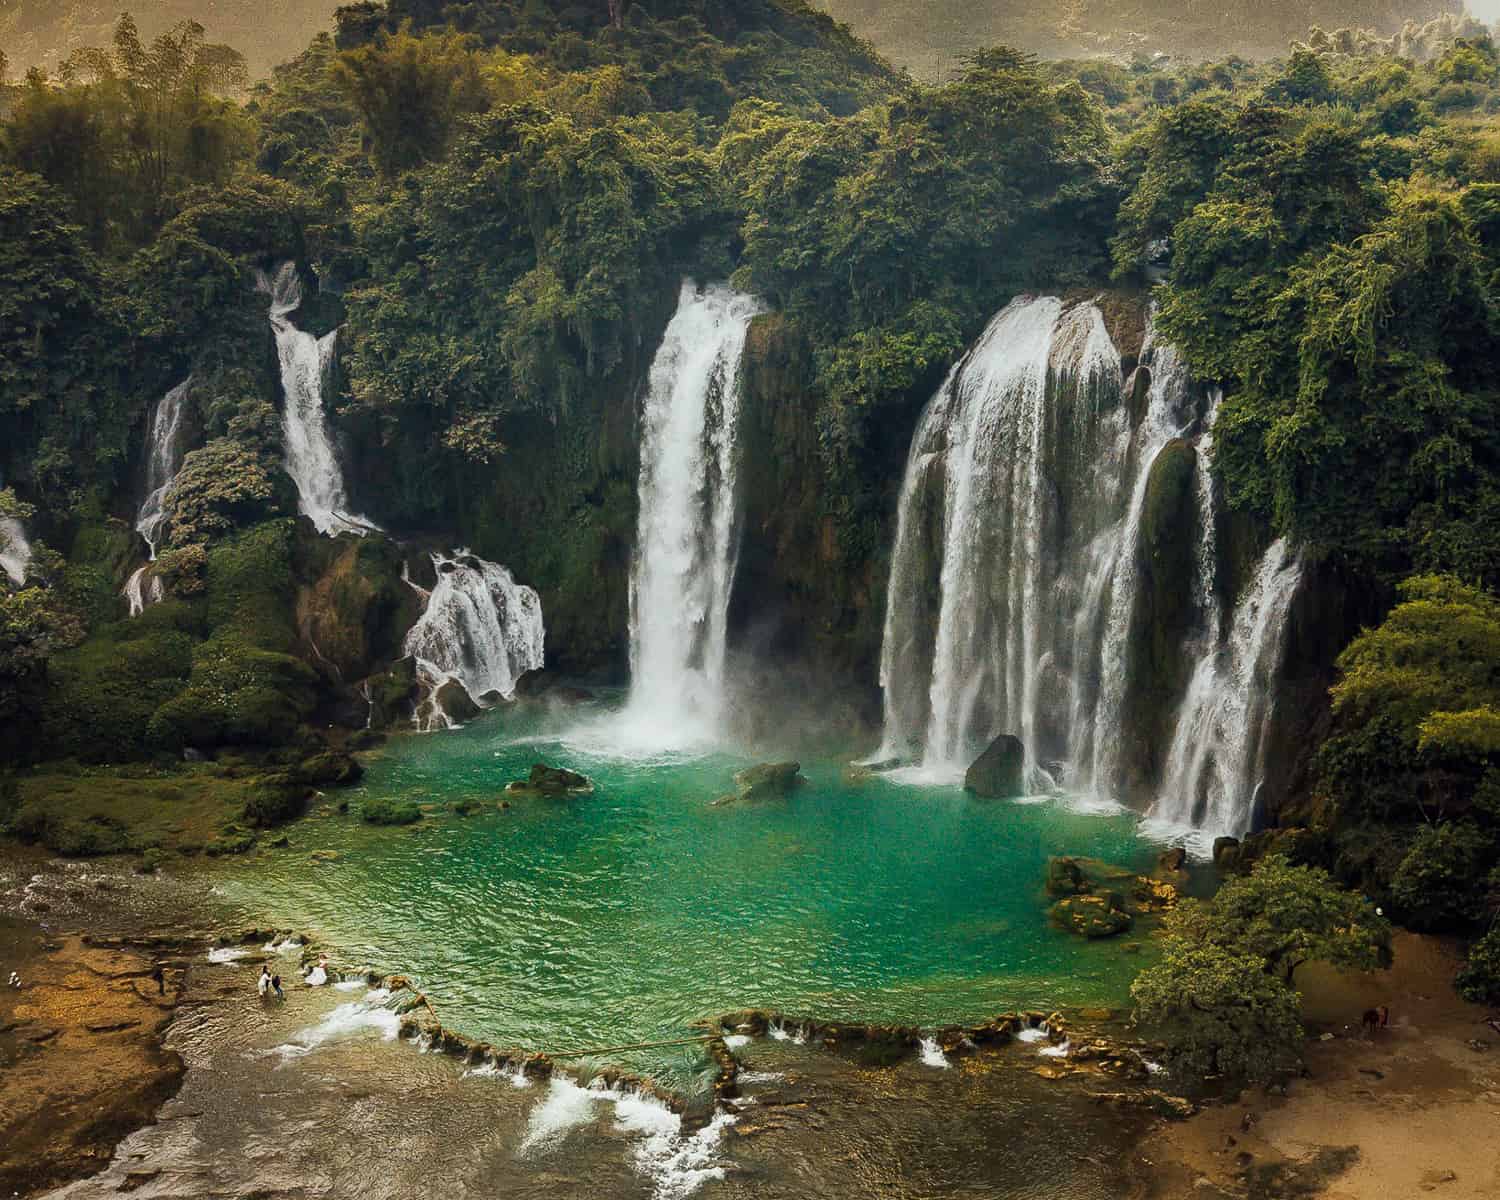 Vietnam In 4K - Land Of Famous Natural Wonders